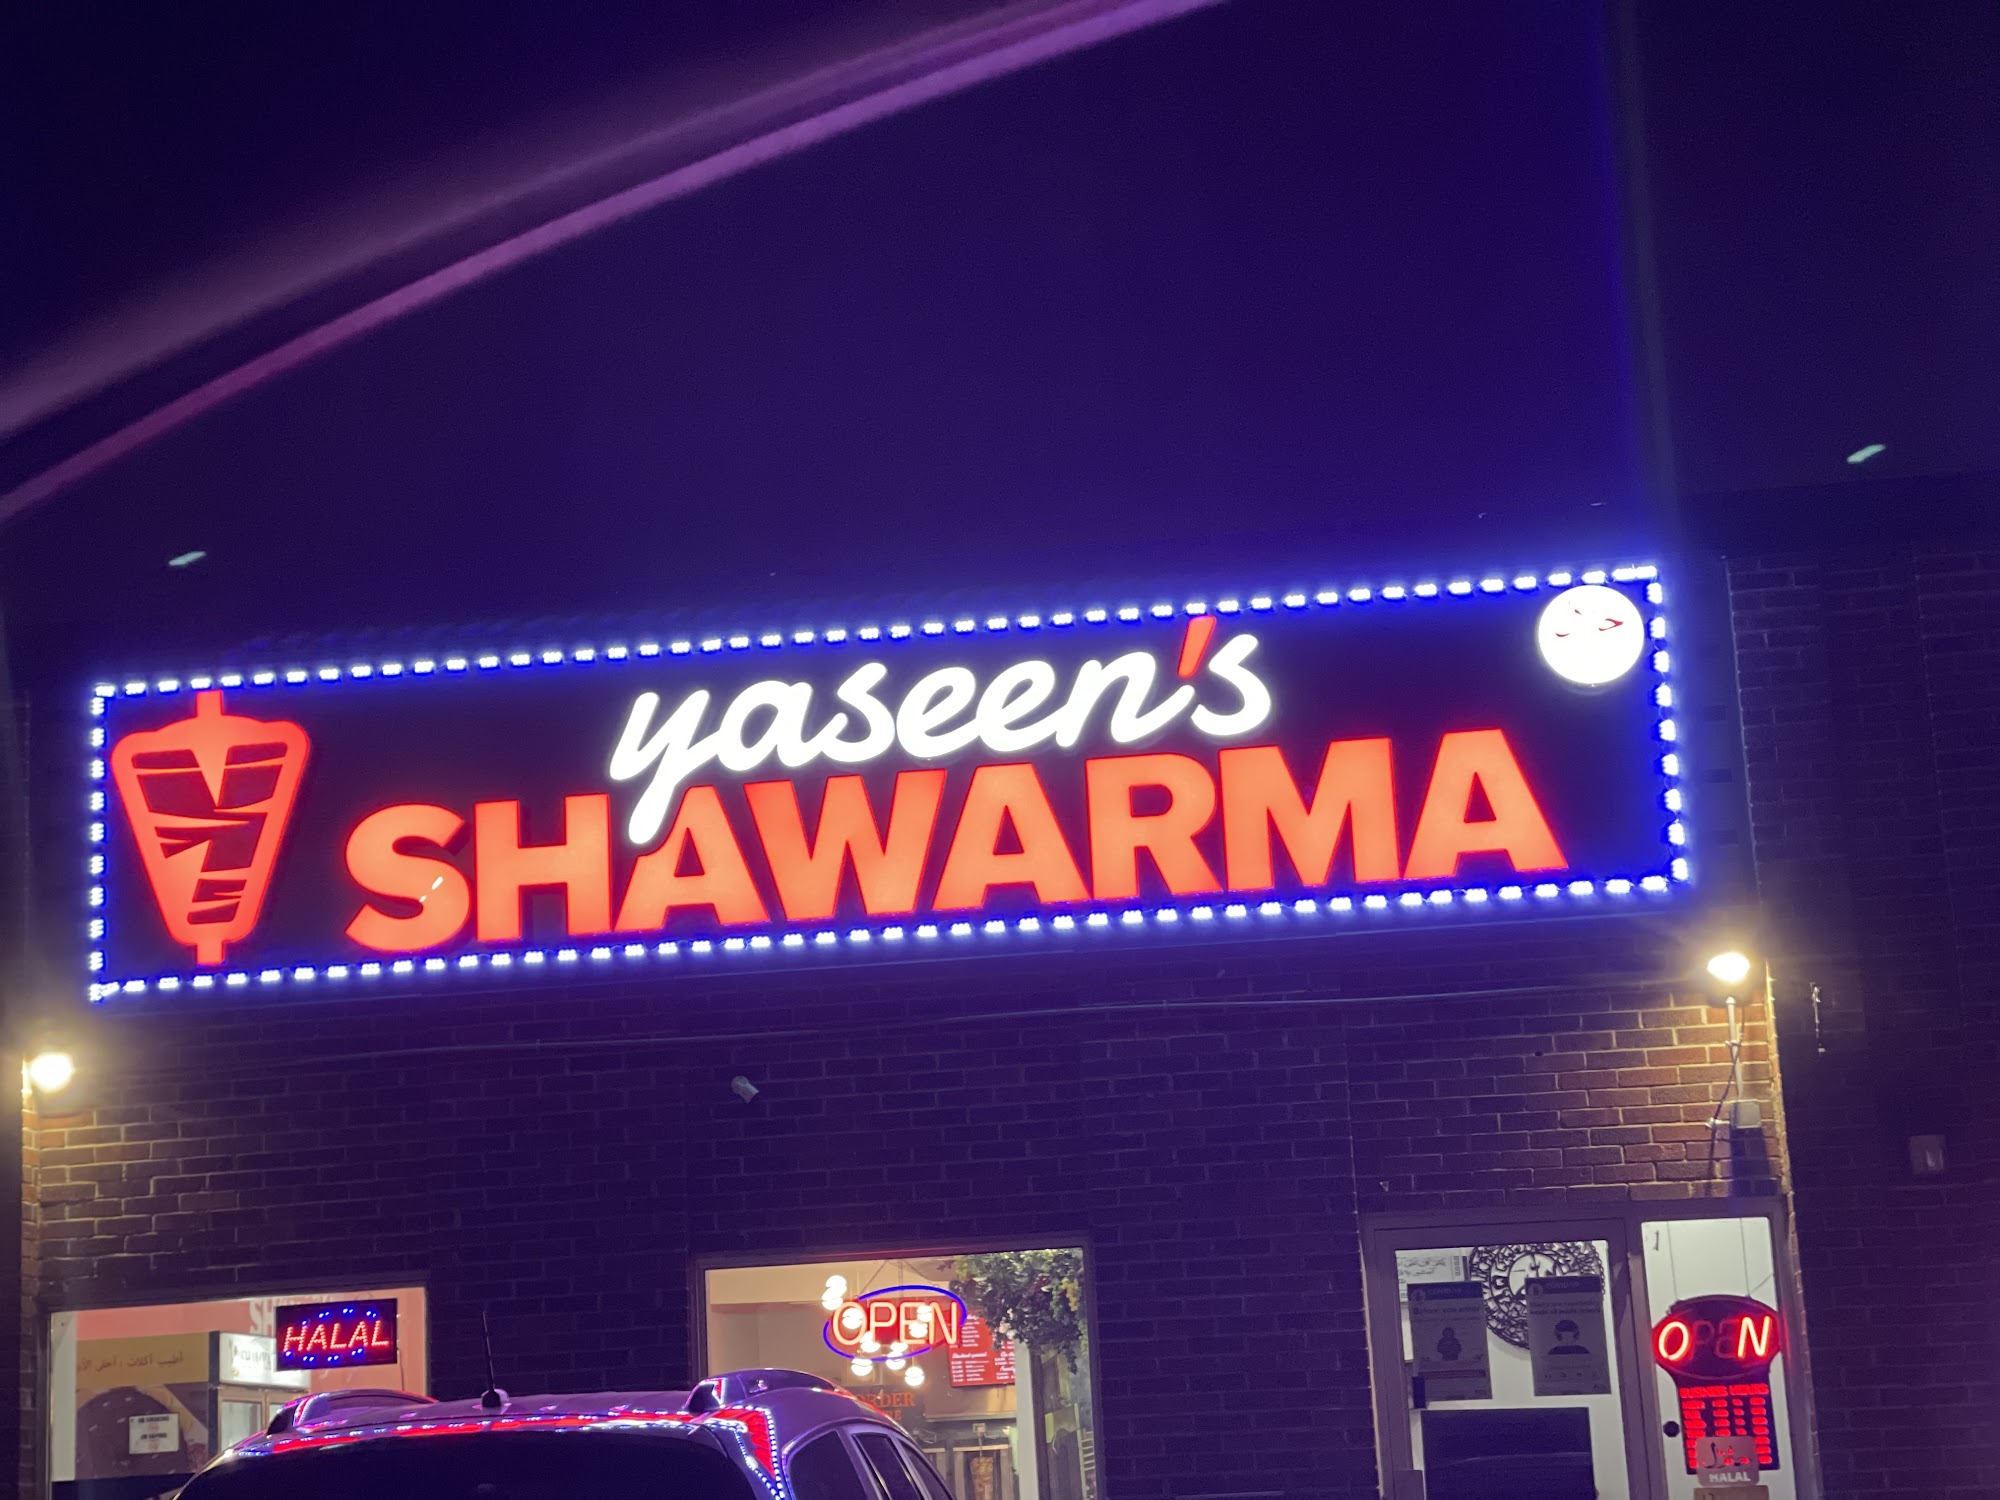 Yaseen’s Shawarma